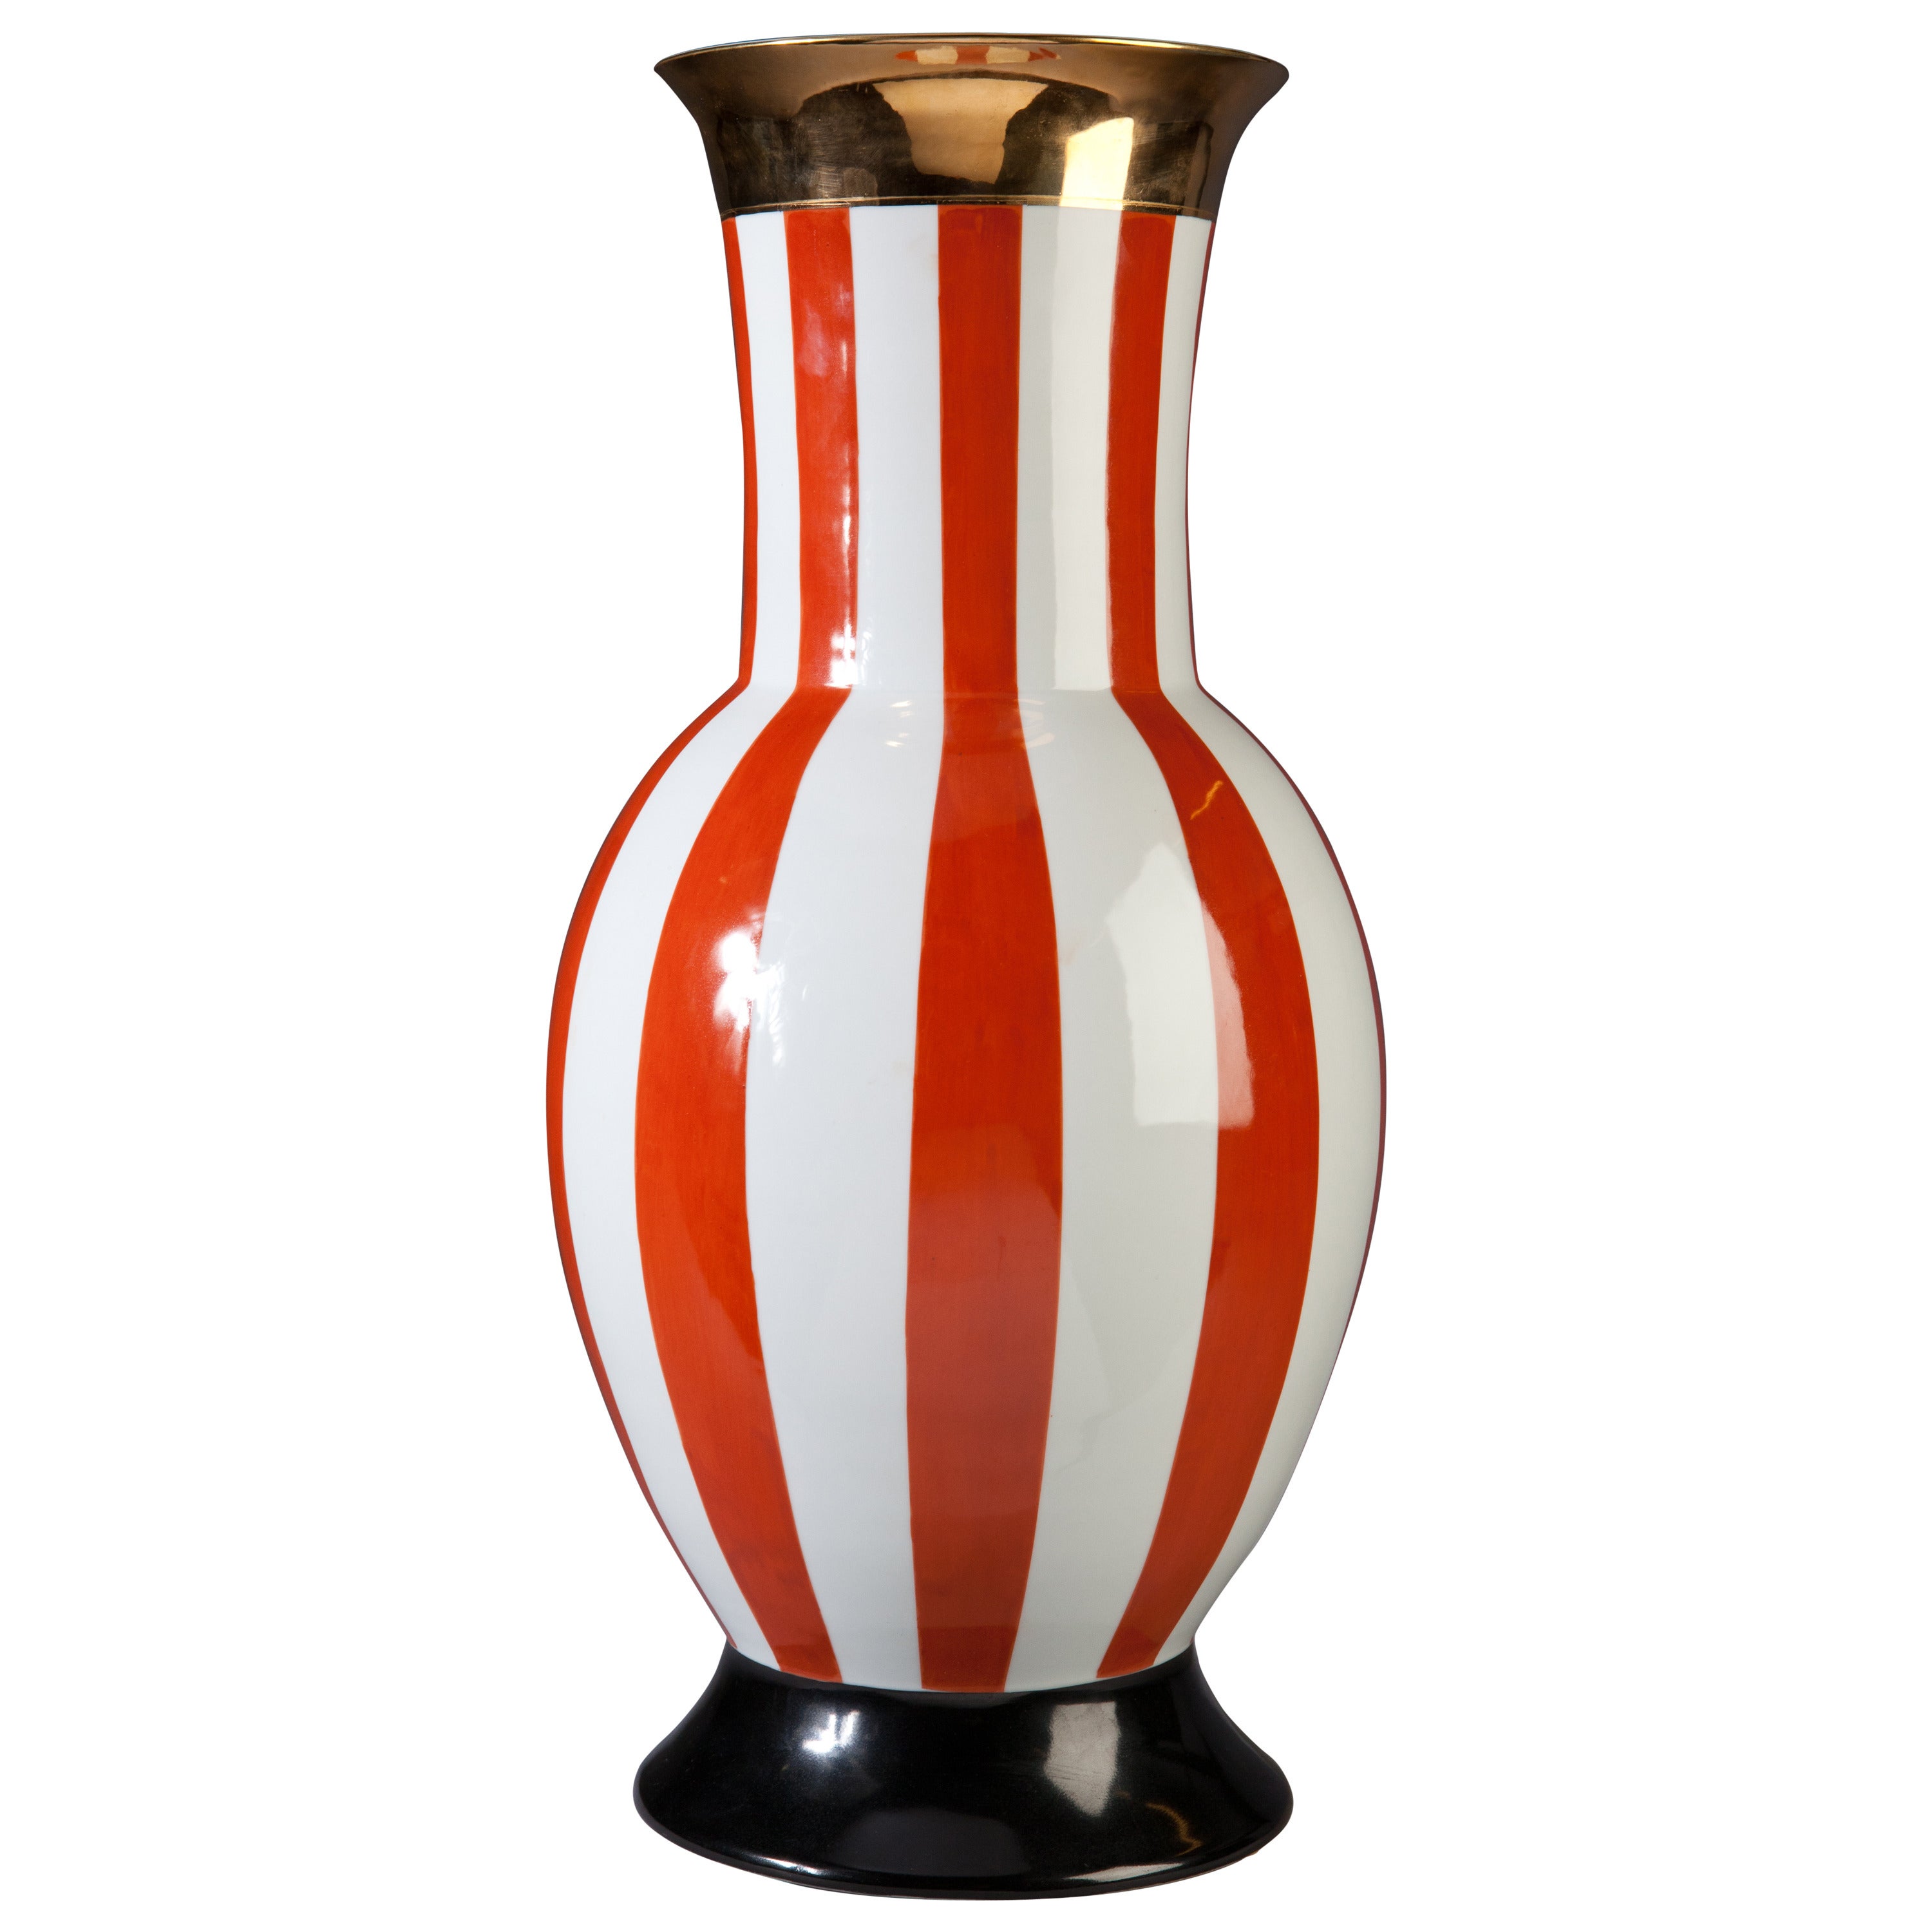 1950s Style Vase in the Italian Carnival Style, Frederico de Luca